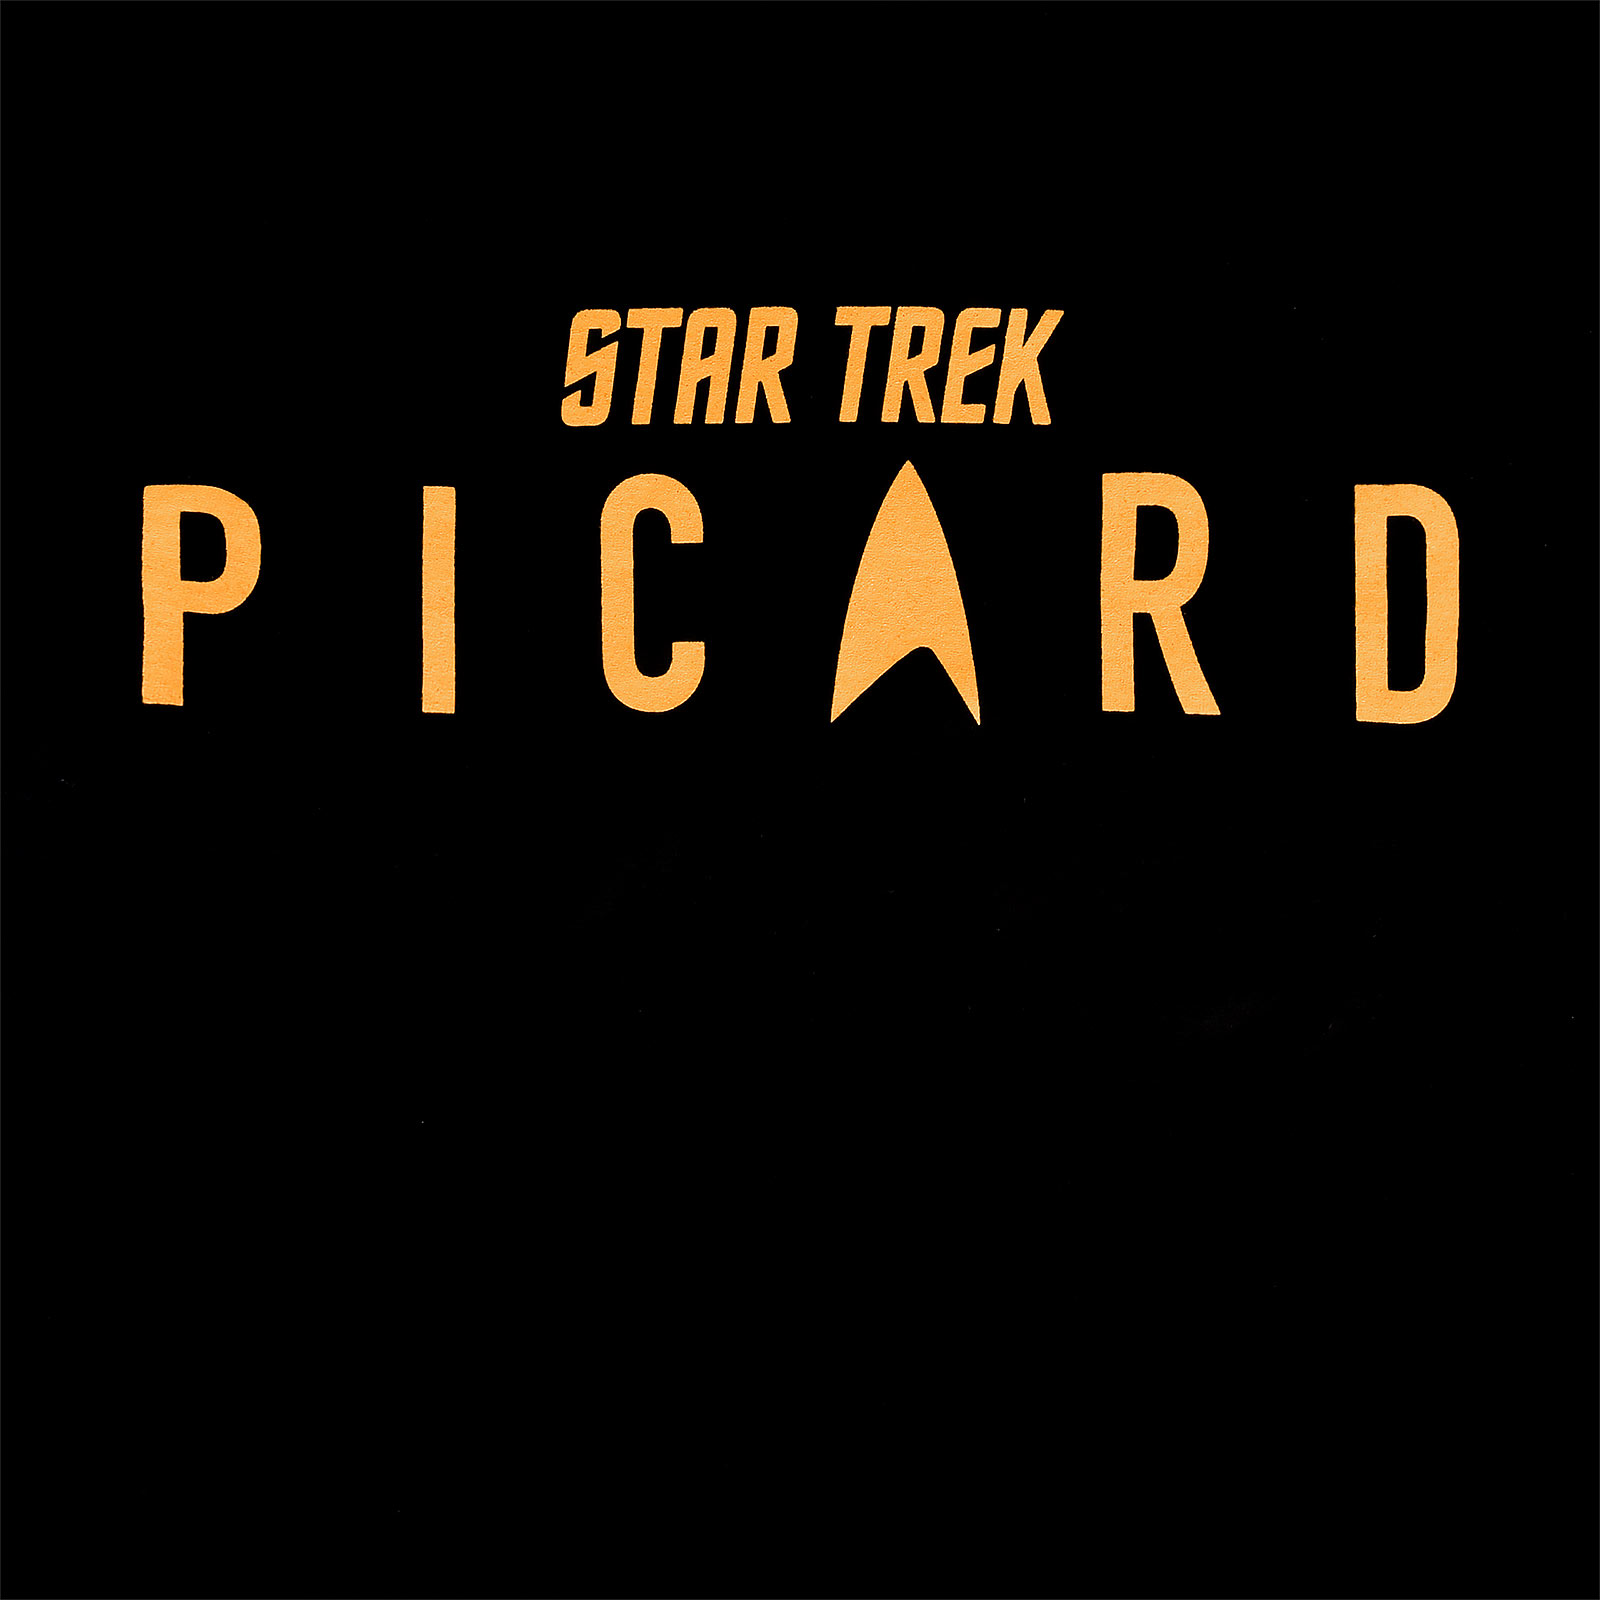 Star Trek - Picard Logo T-Shirt schwarz